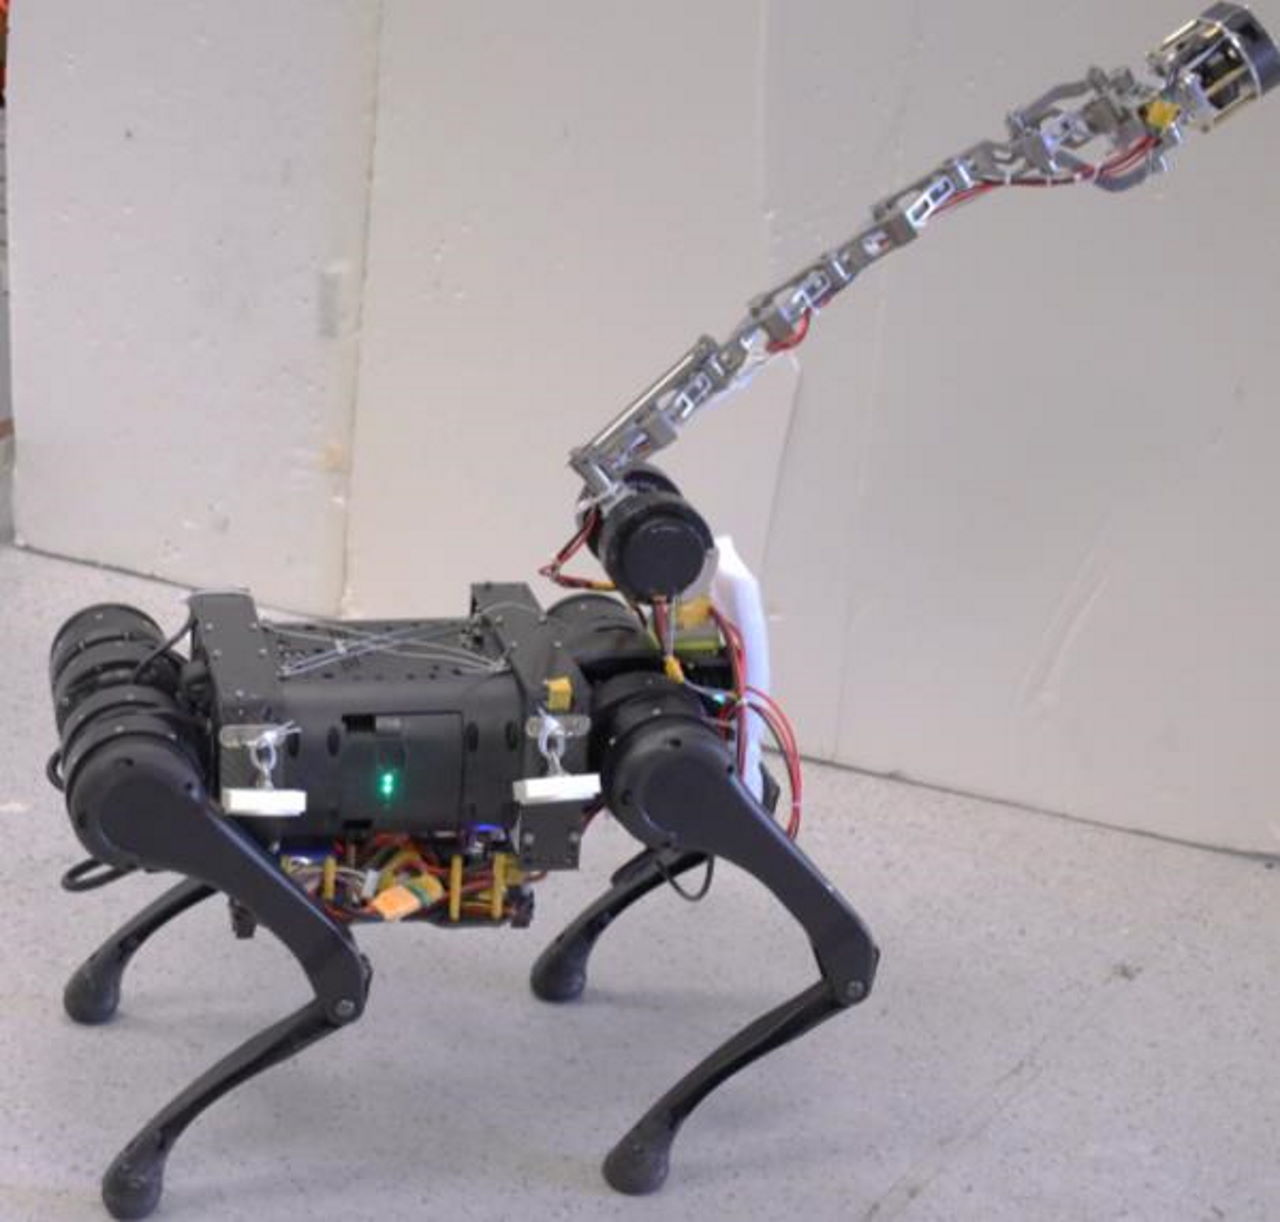 Робот&amp;nbsp;Unitree A1 з хвостом, який розробили інженери.&amp;nbsp;Yunxi Tang et al. / arXiv, 2022